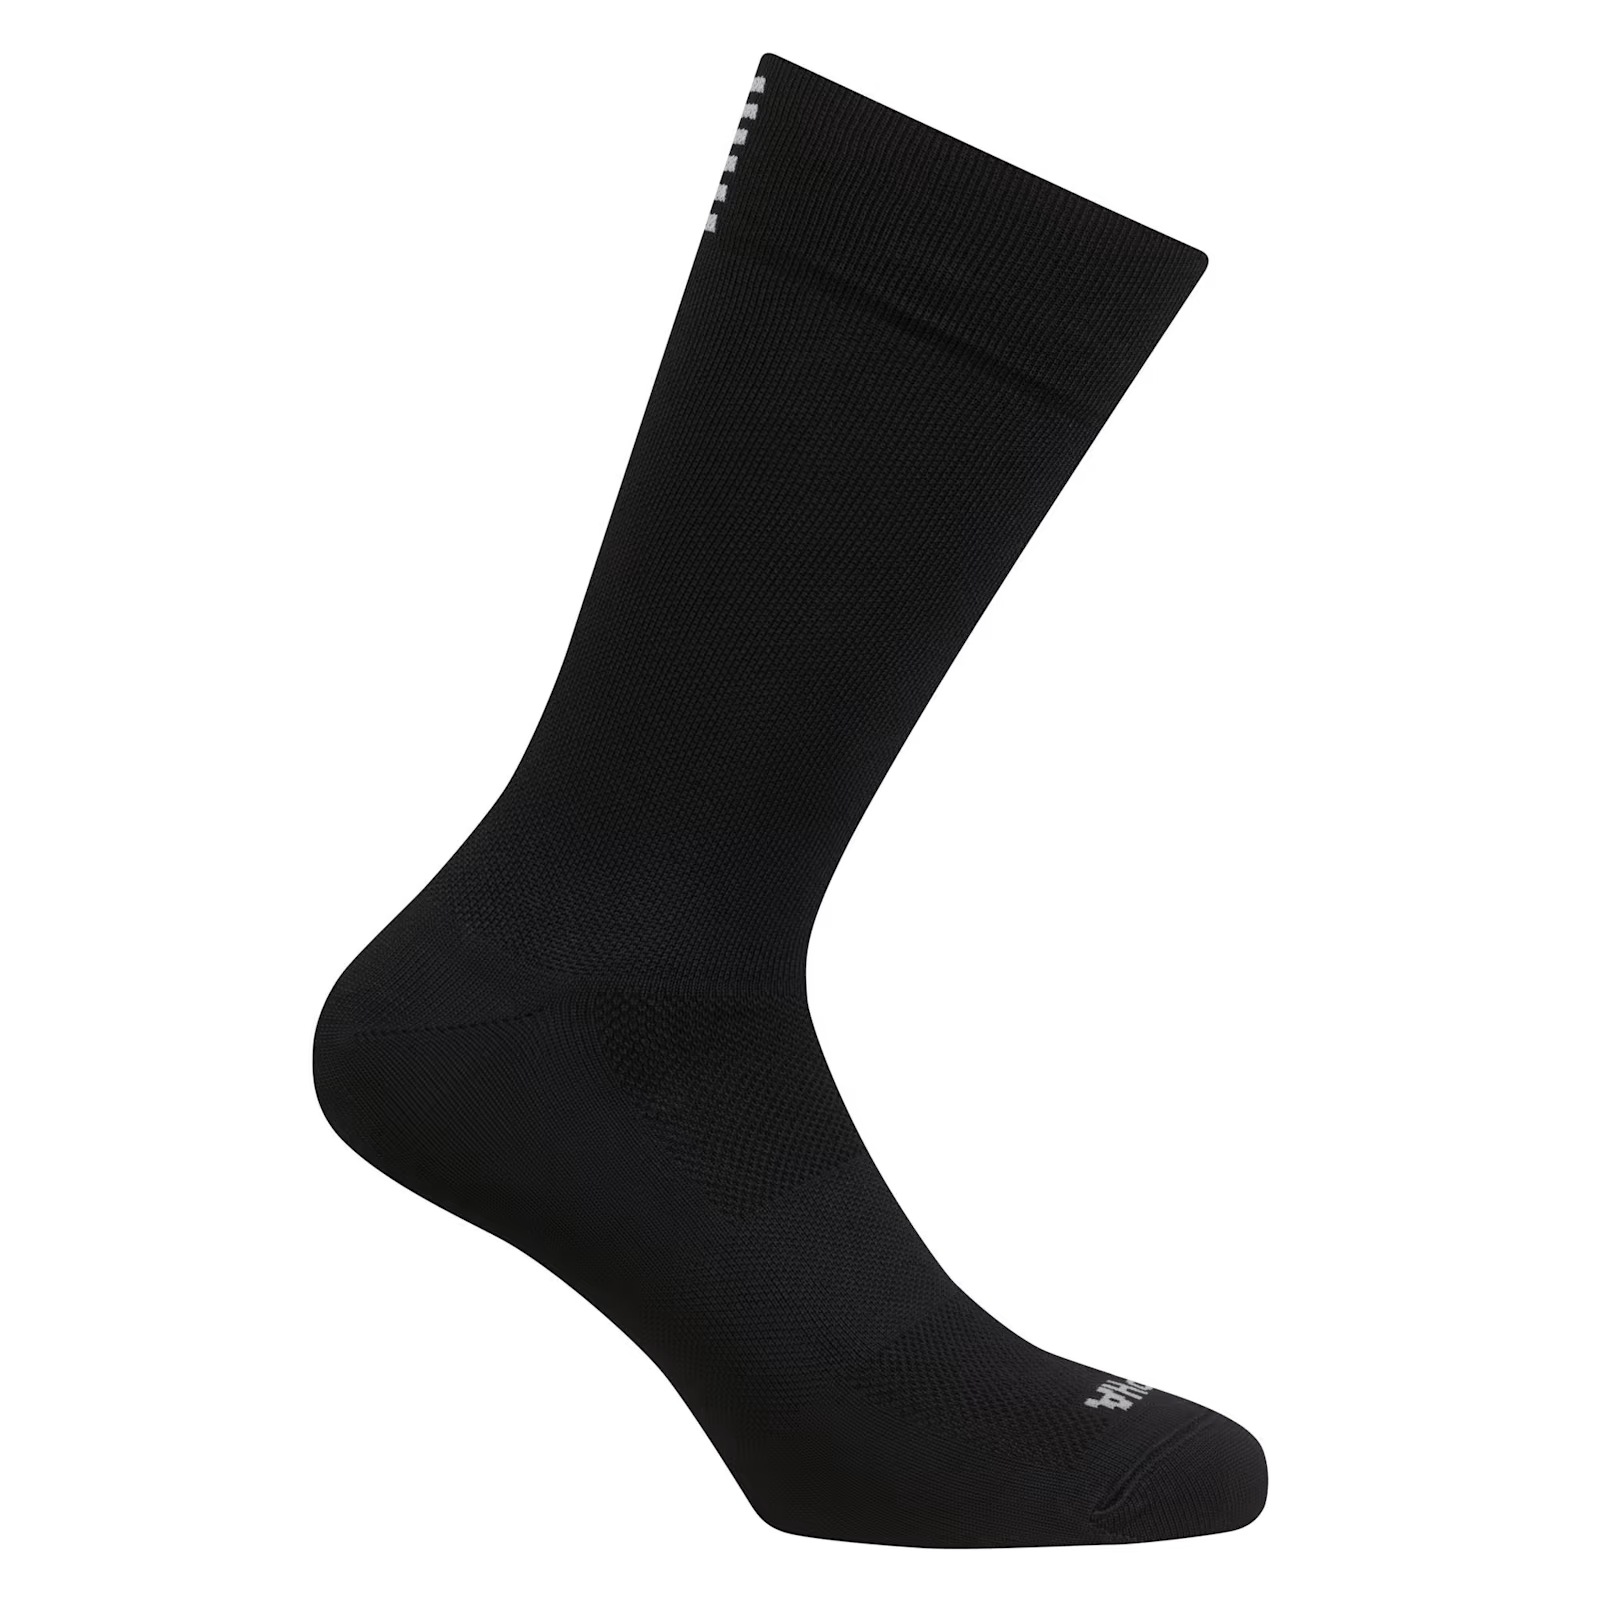 Rapha Pro Team Socks - Extra Long Black/White / XS Apparel - Clothing - Socks